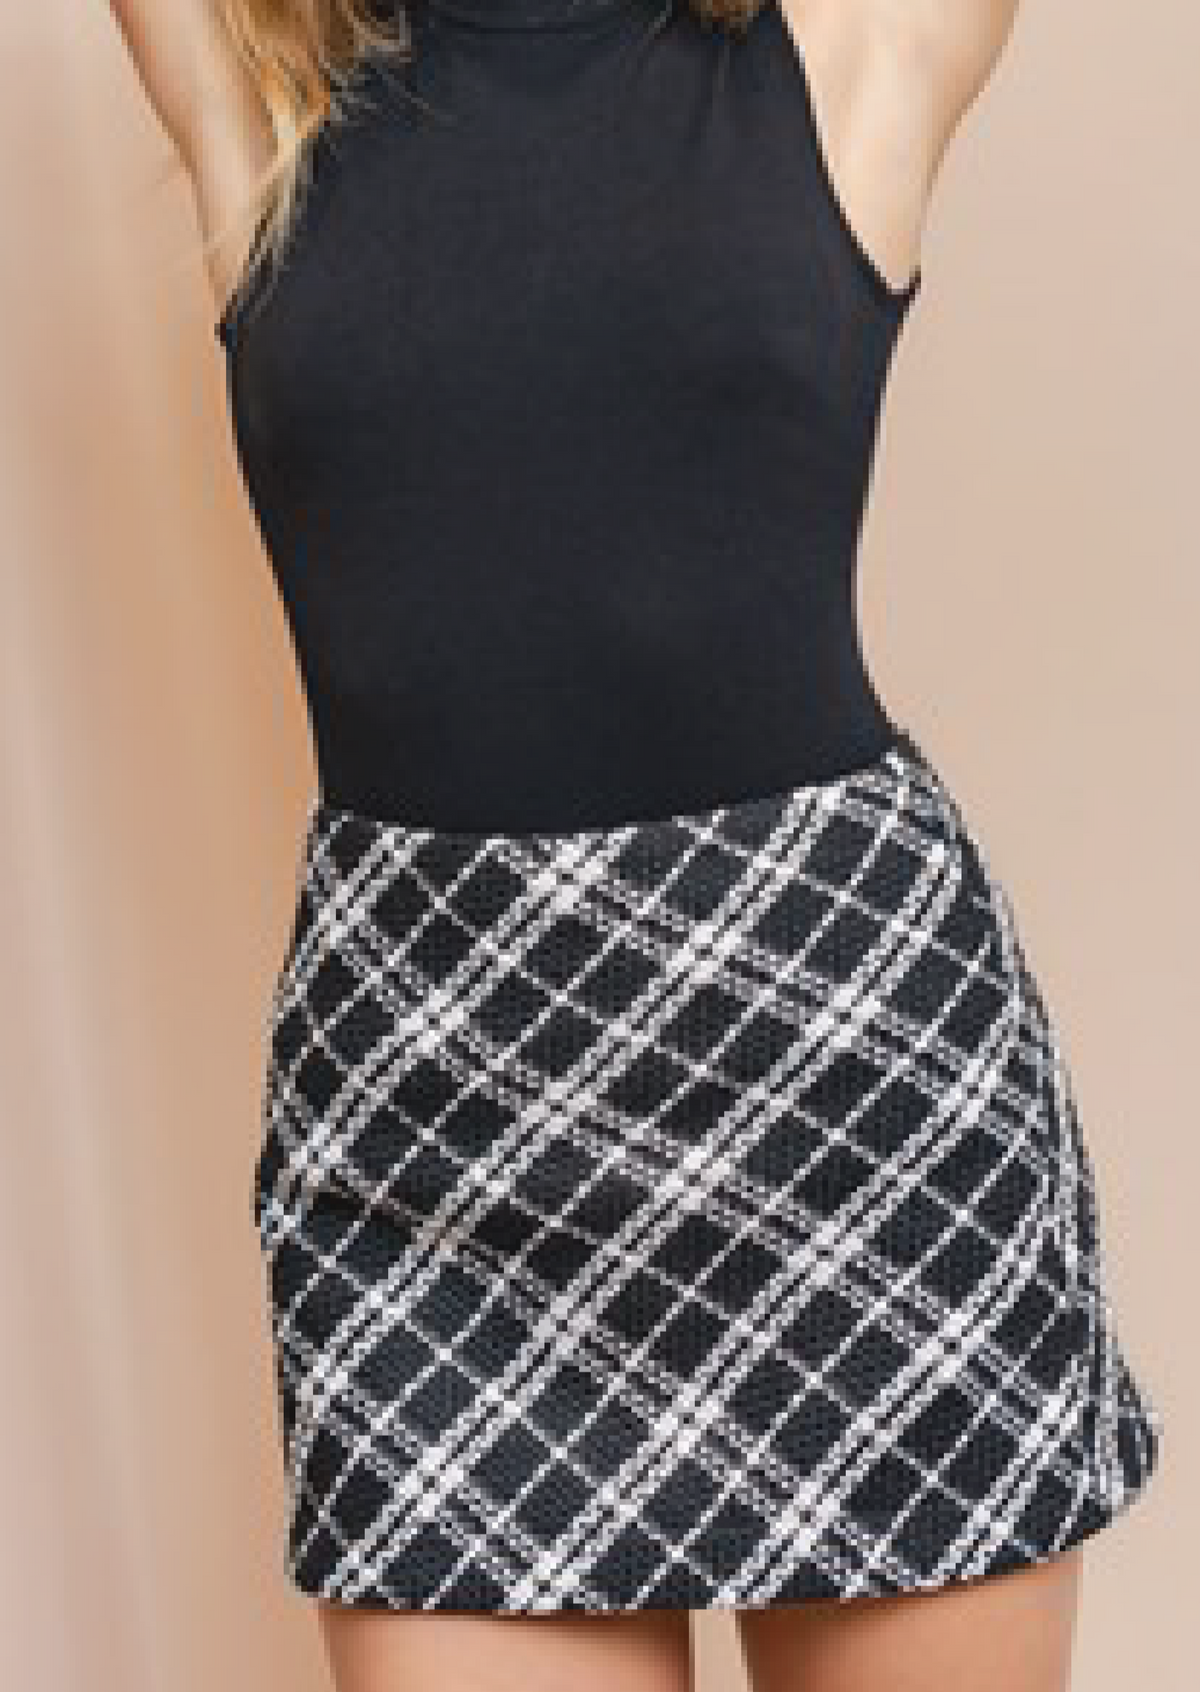 plaid skirt aline skirt plaid mini skirt bodycon skirt black and white plaid